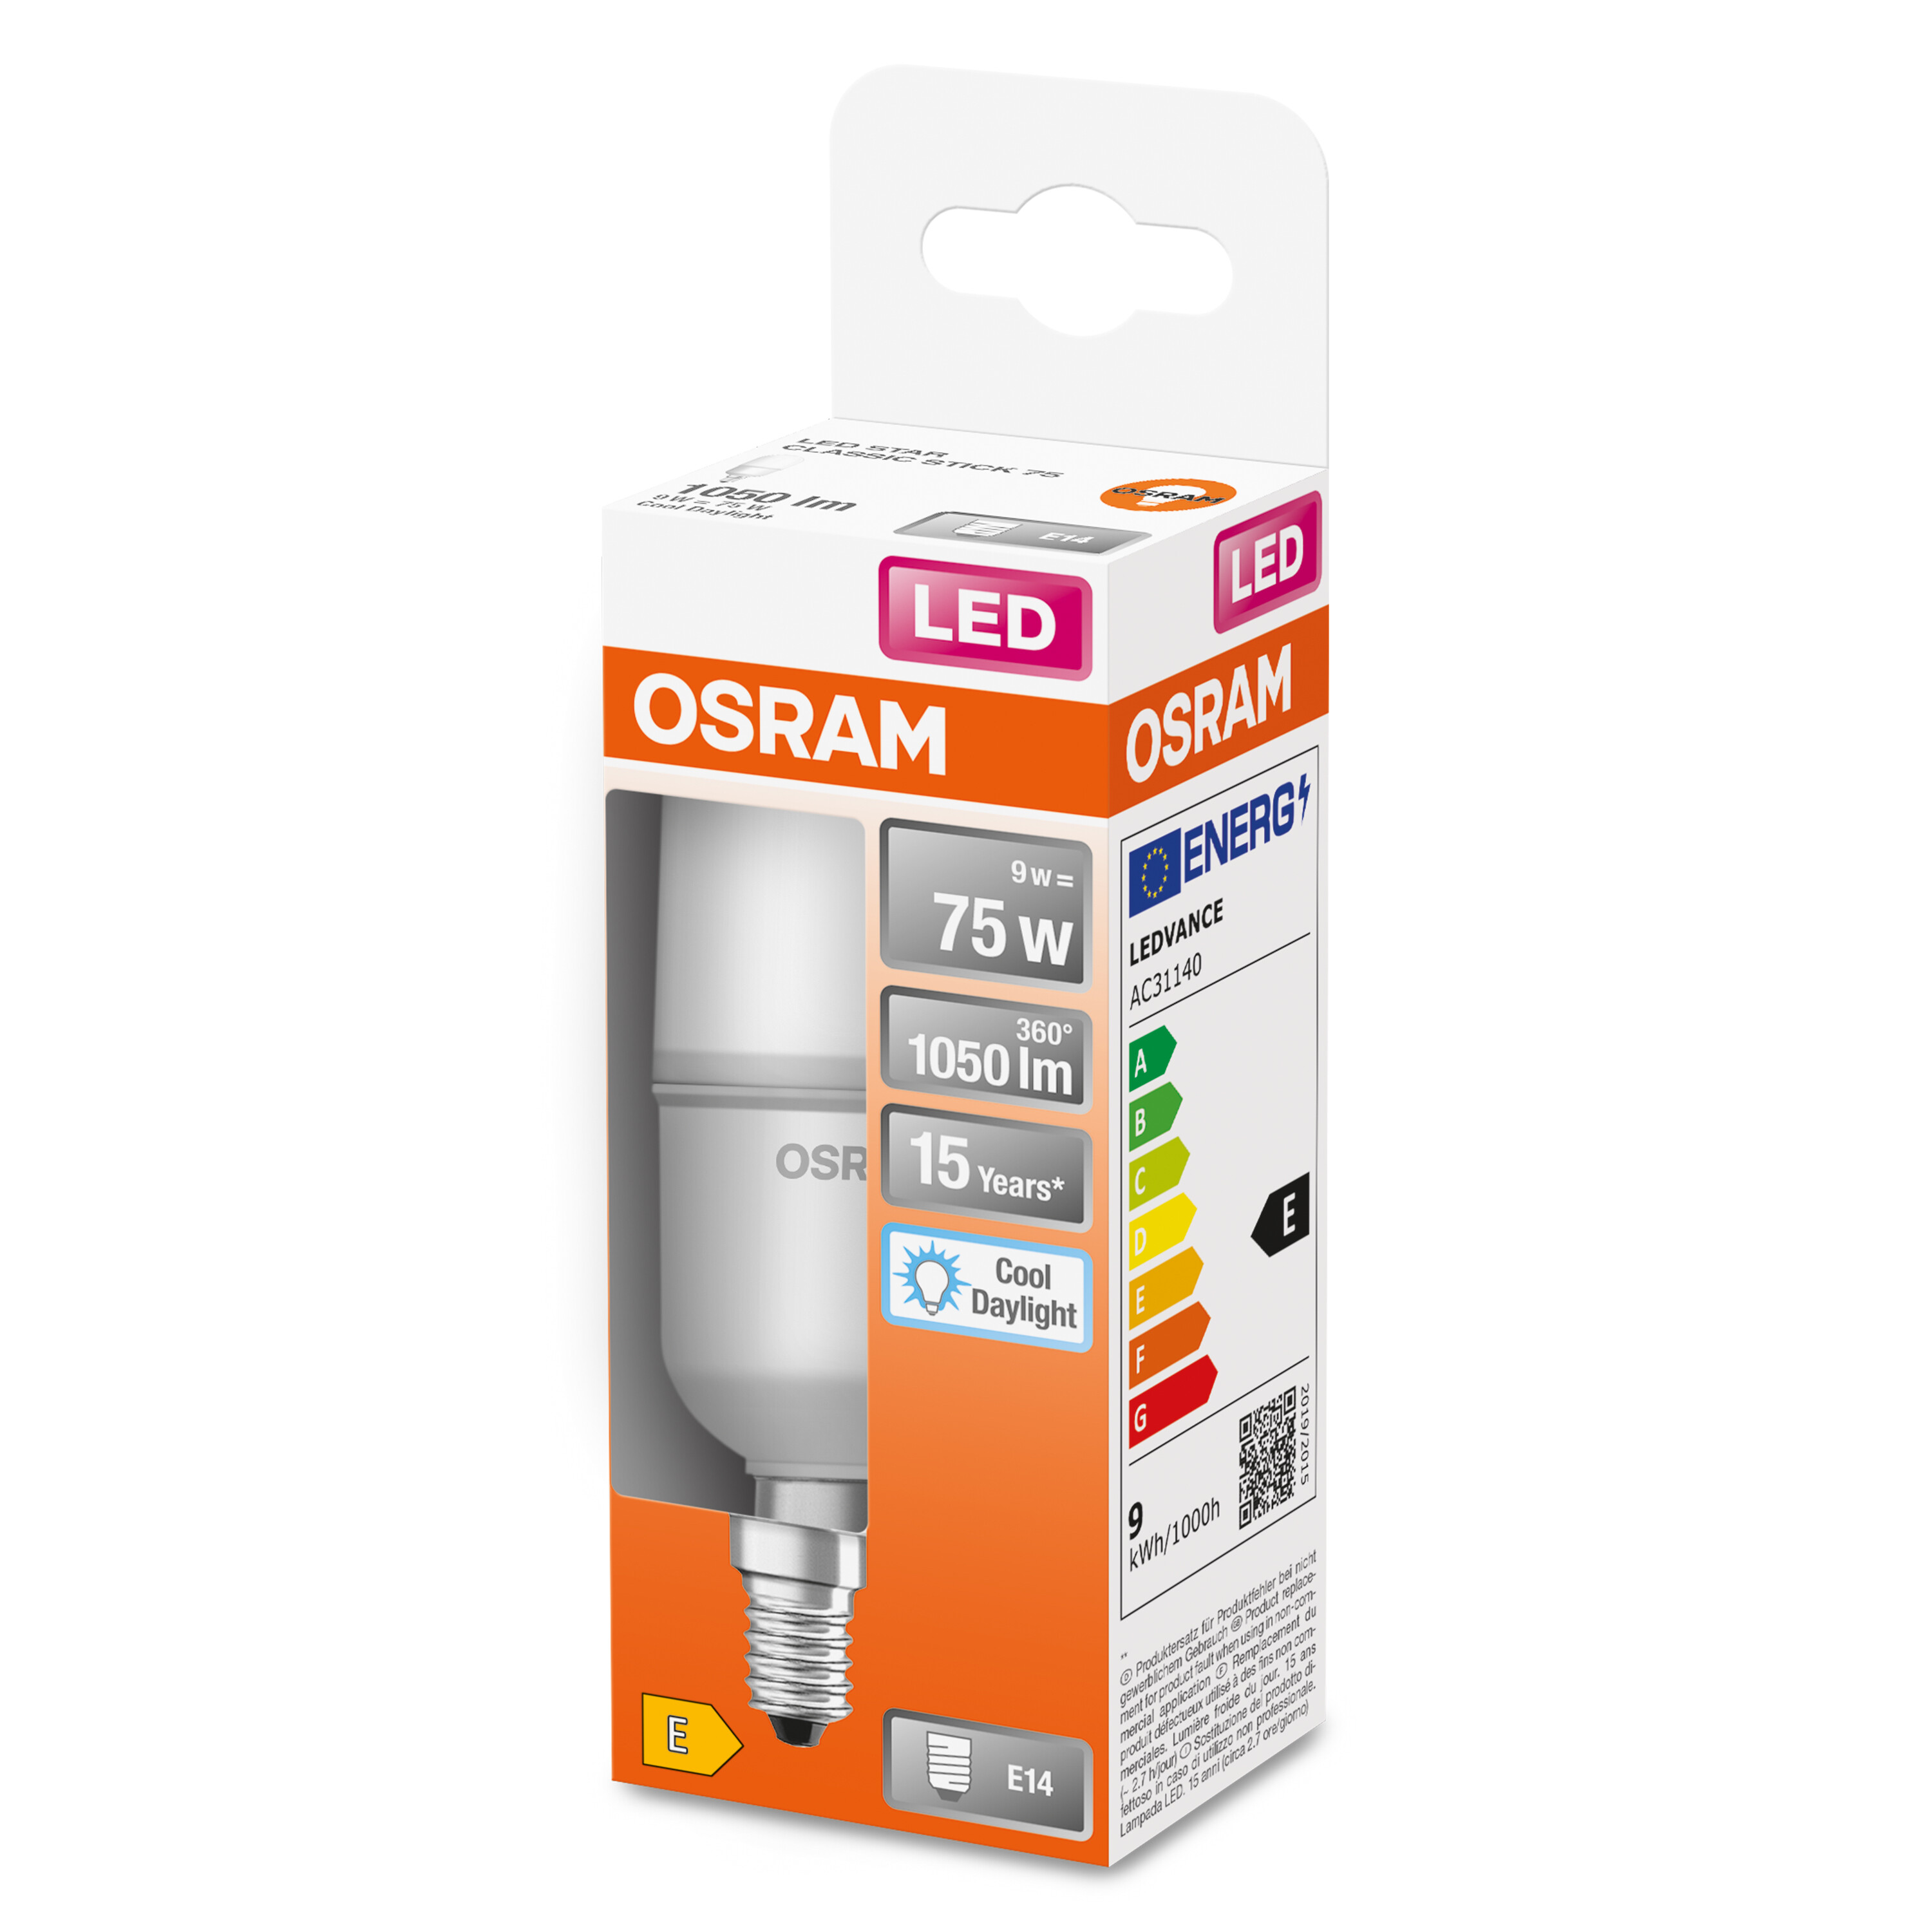 LED STAR STICK Lampe OSRAM  lumen 1050 LED Kaltweiß